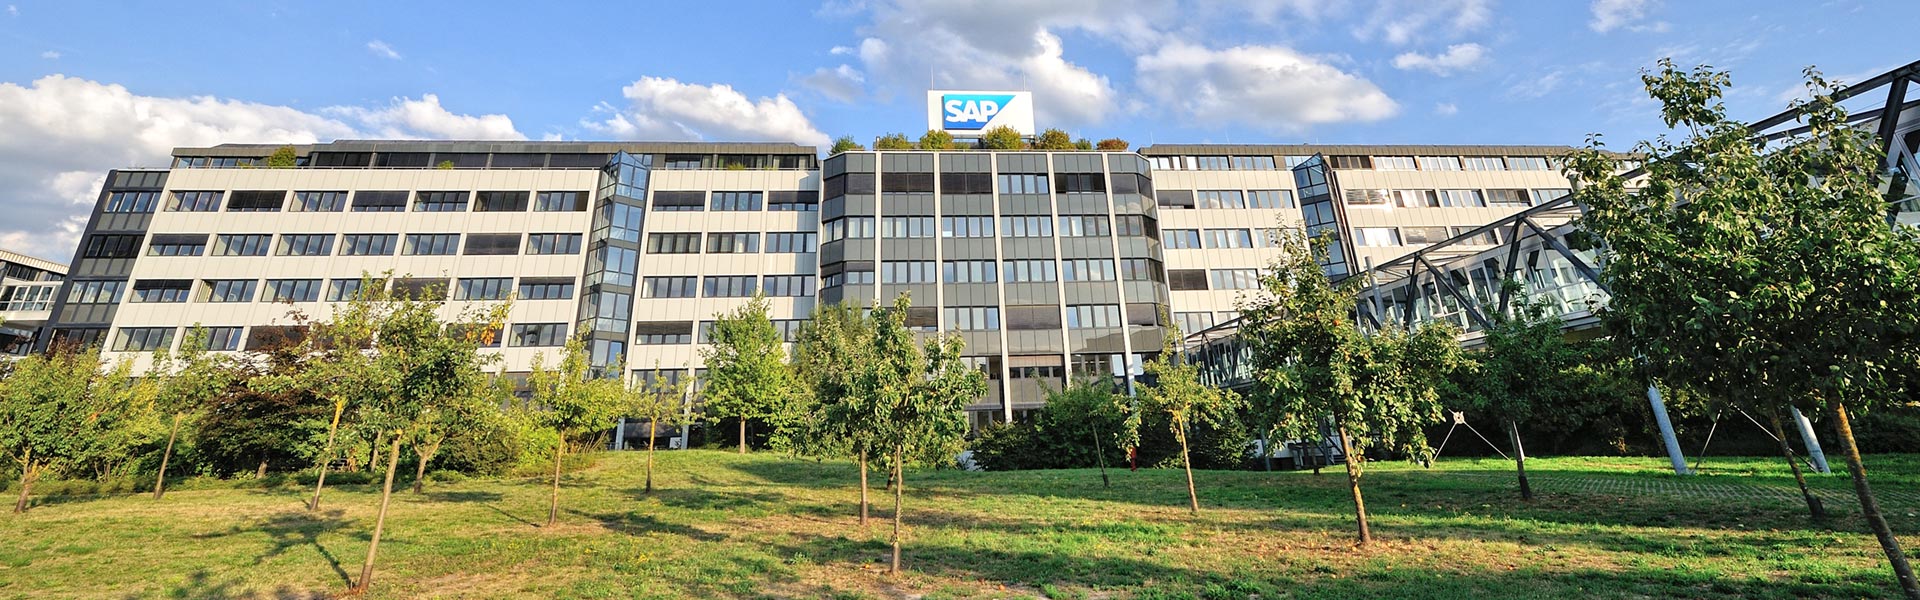 SAP to Release Third Quarter 2022 Results